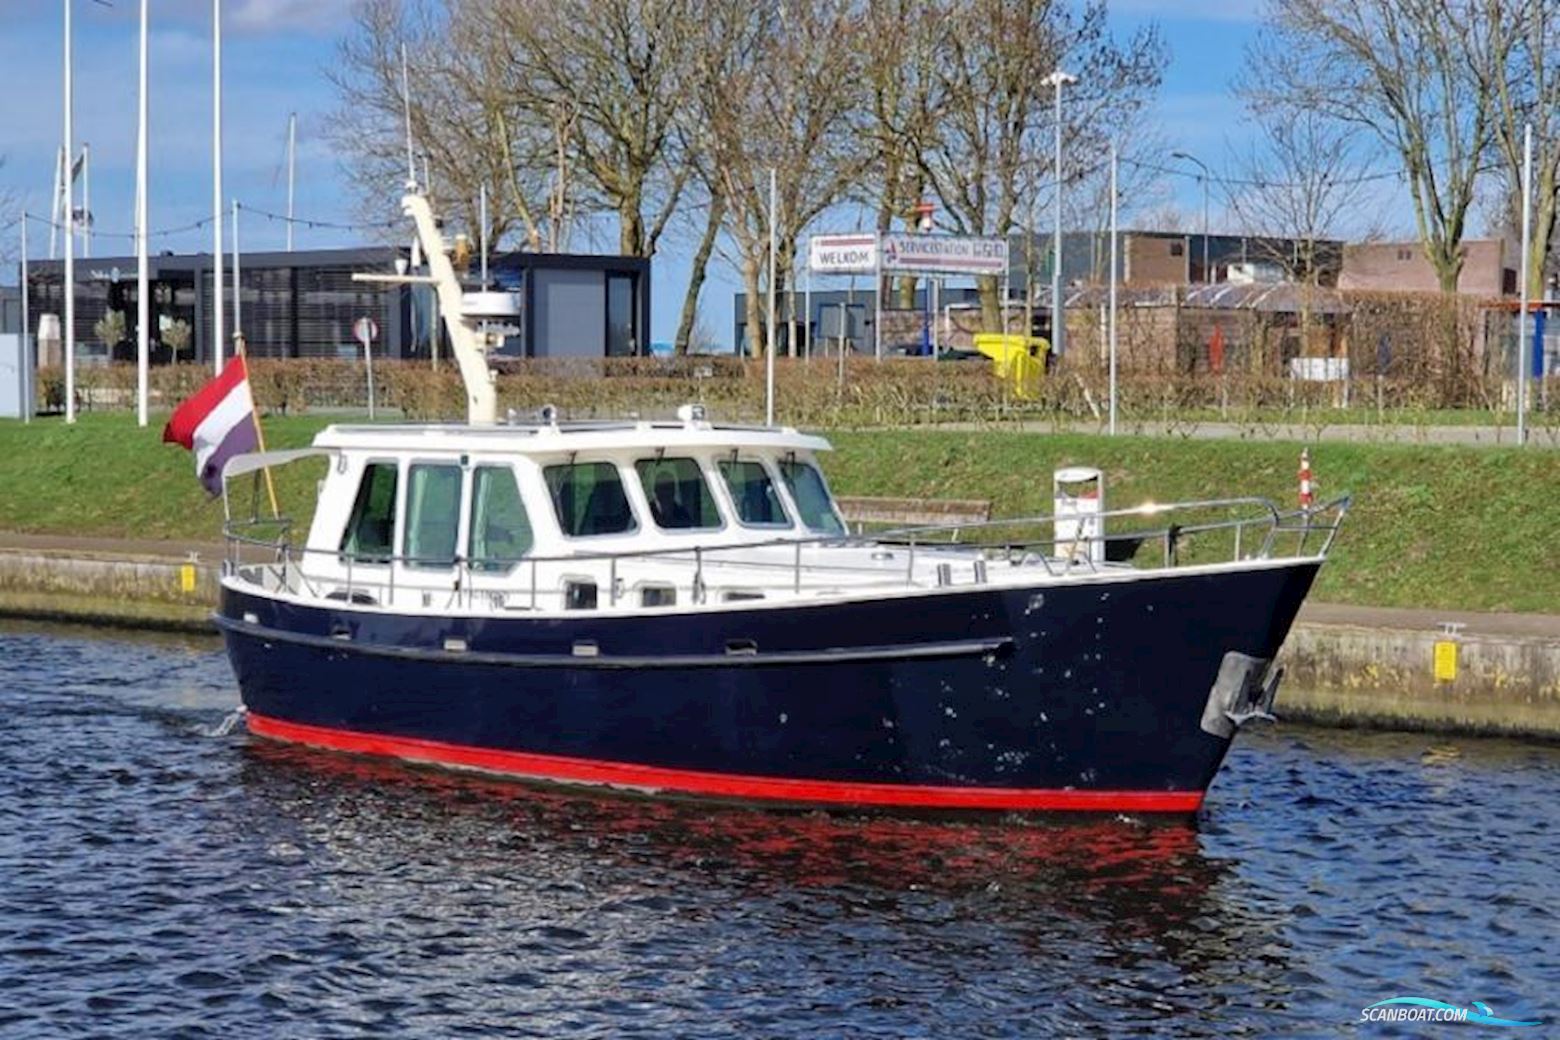 Almkotter 12.80 OK Motorboot 2001, mit Perkins 185 pk. motor, Niederlande